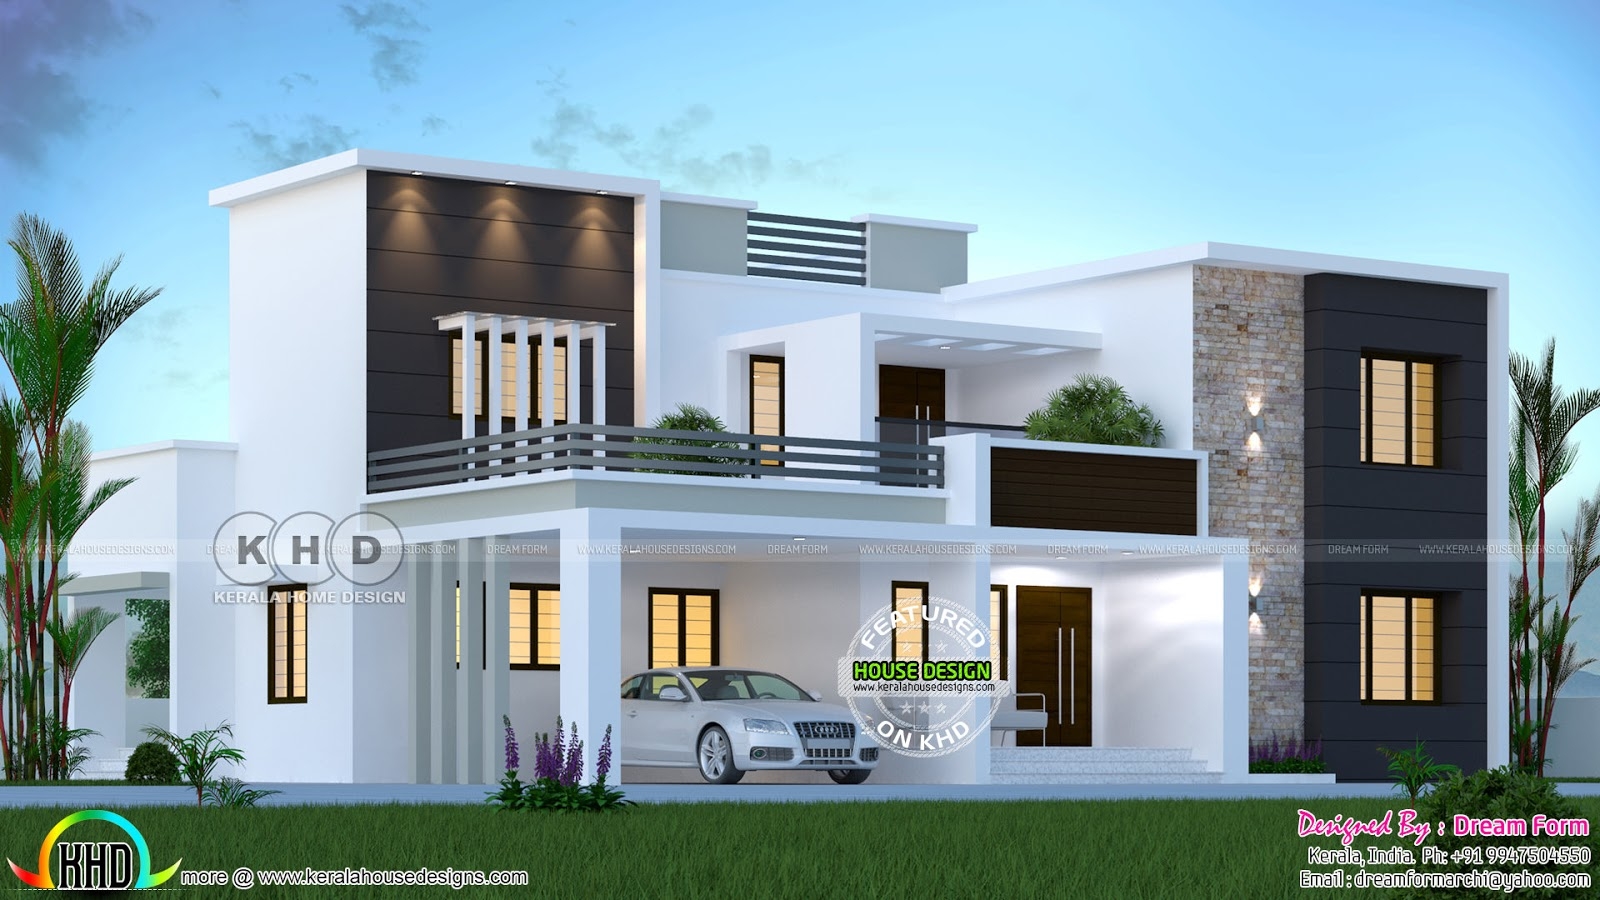 7 Images Khd Kerala Home Design And View - Alqu Blog